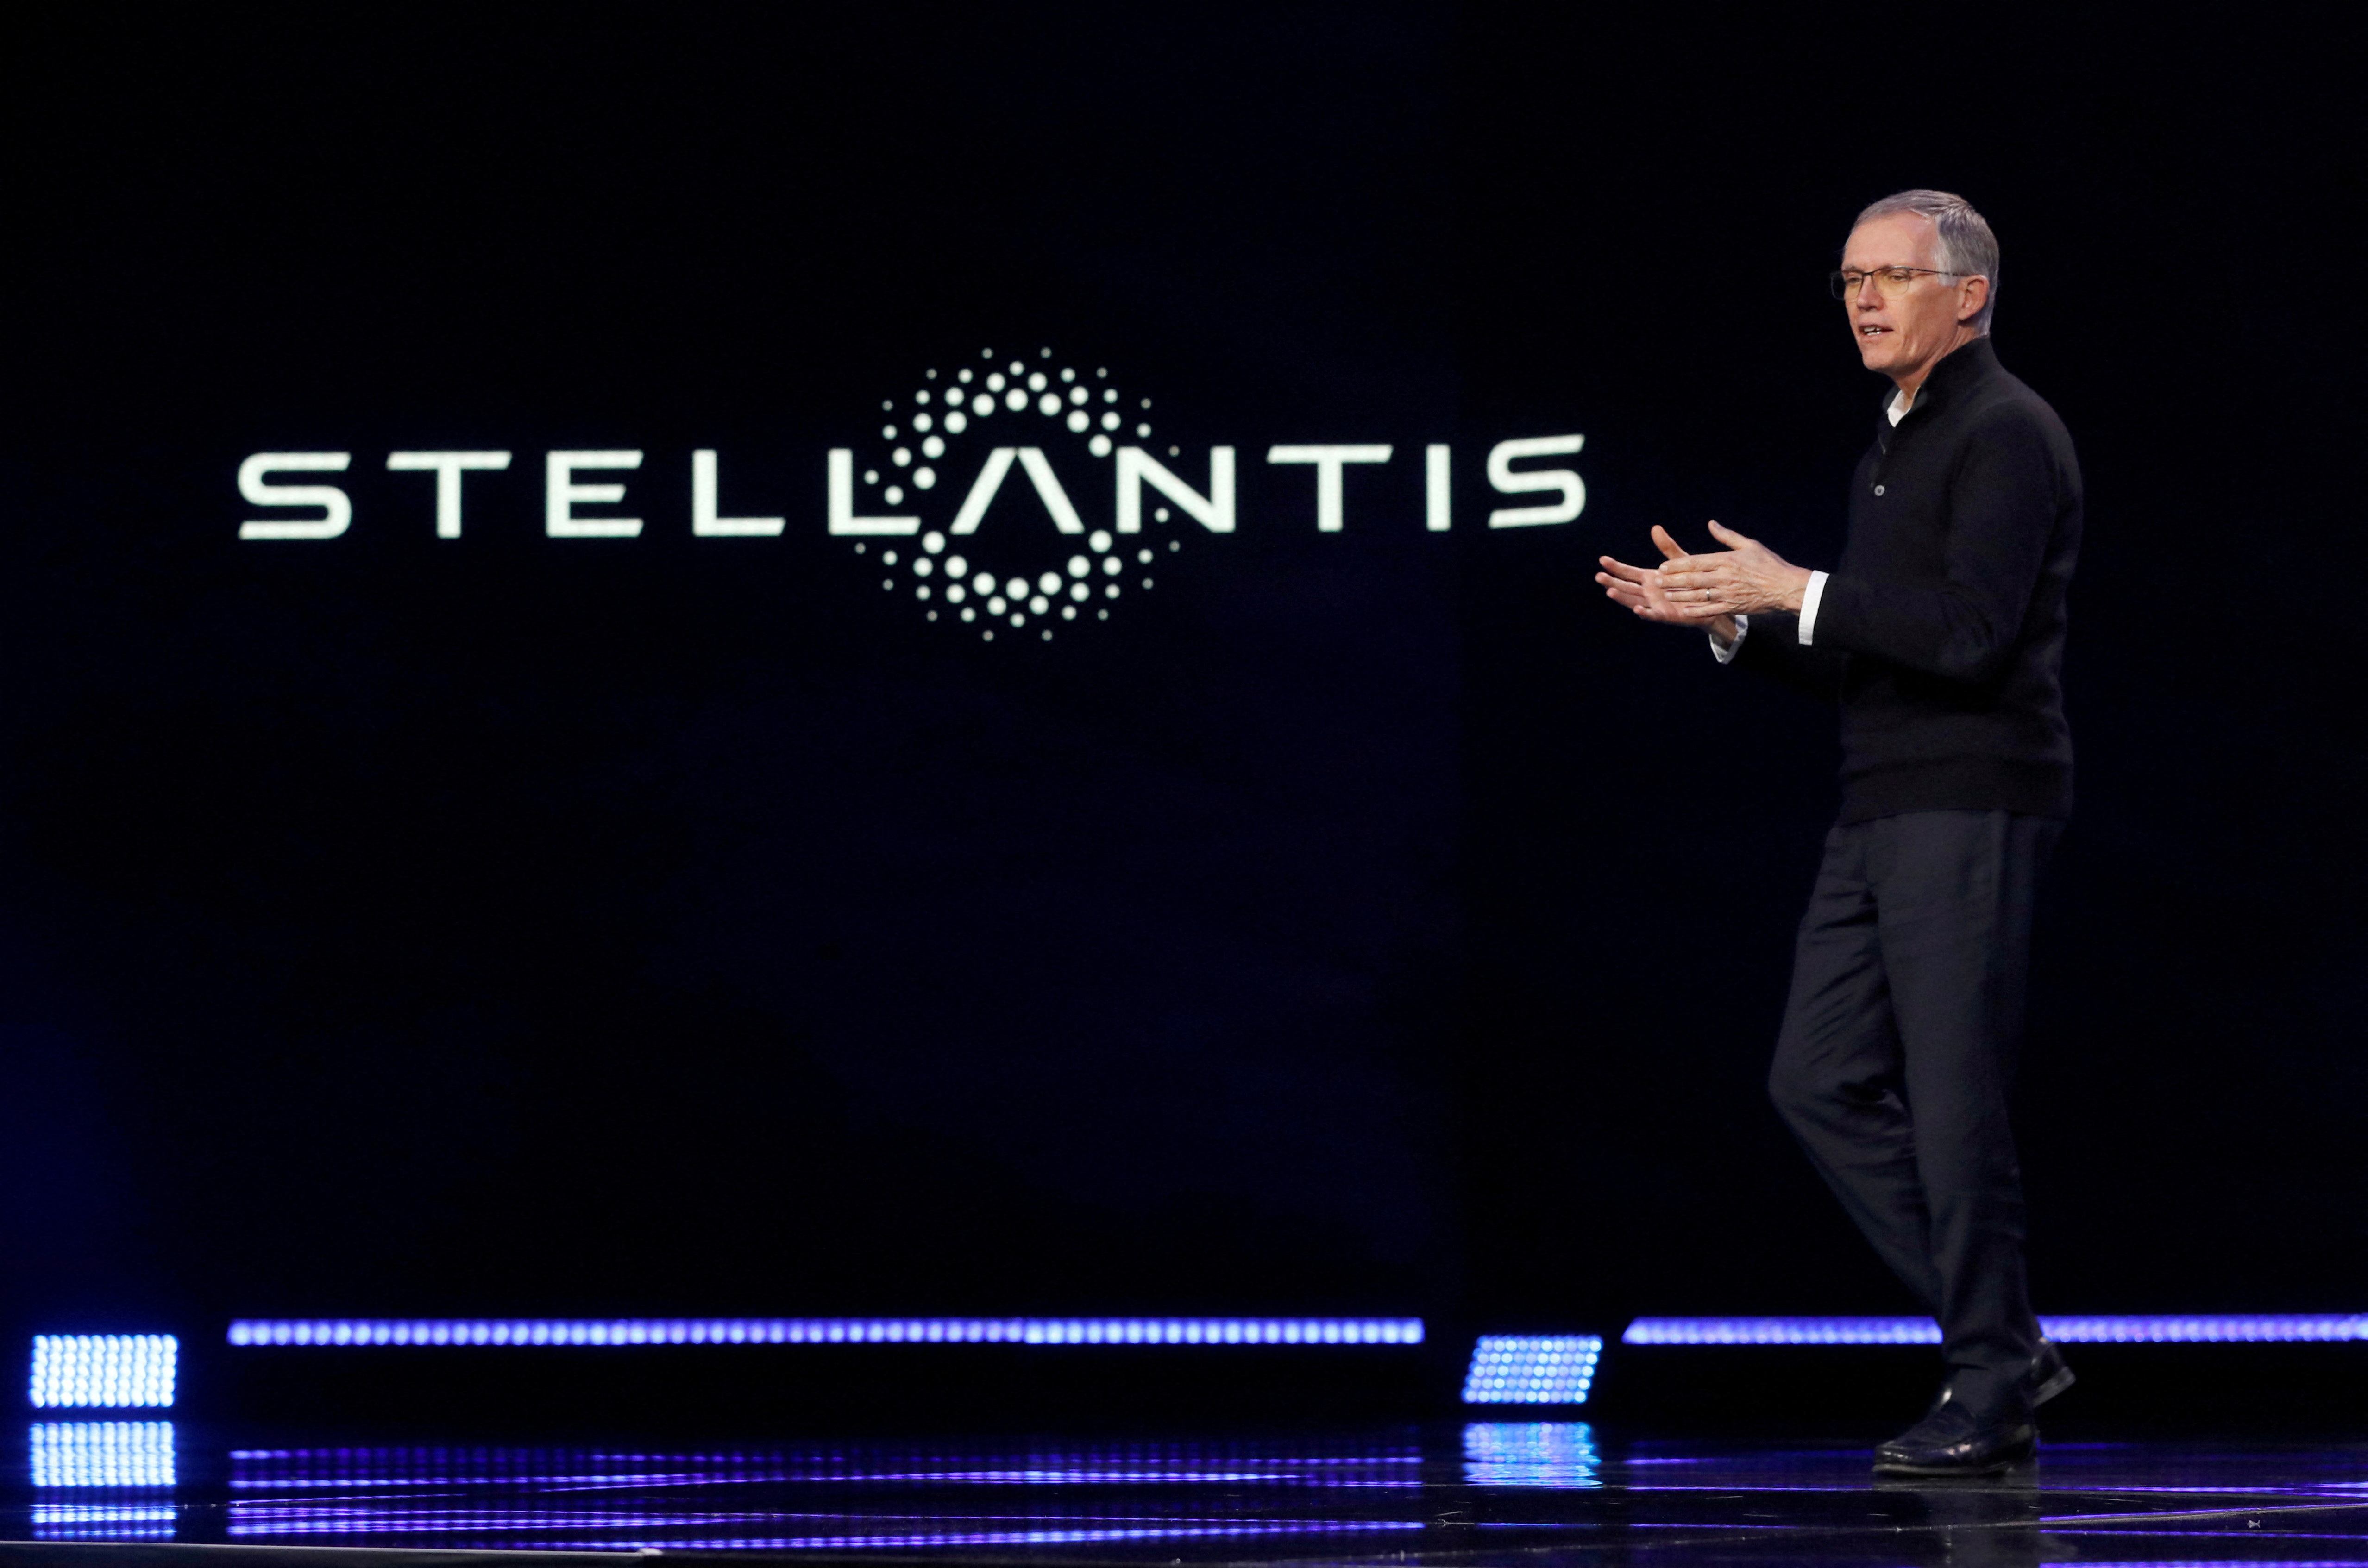 FILE PHOTO: Stellantis CEO Carlos Tavares speaks during a Stellantis keynote address at CES 2023, an annual consumer electronics trade show, in Las Vegas, Nevada, U.S. January 5, 2023.  REUTERS/Steve Marcus/File Photo